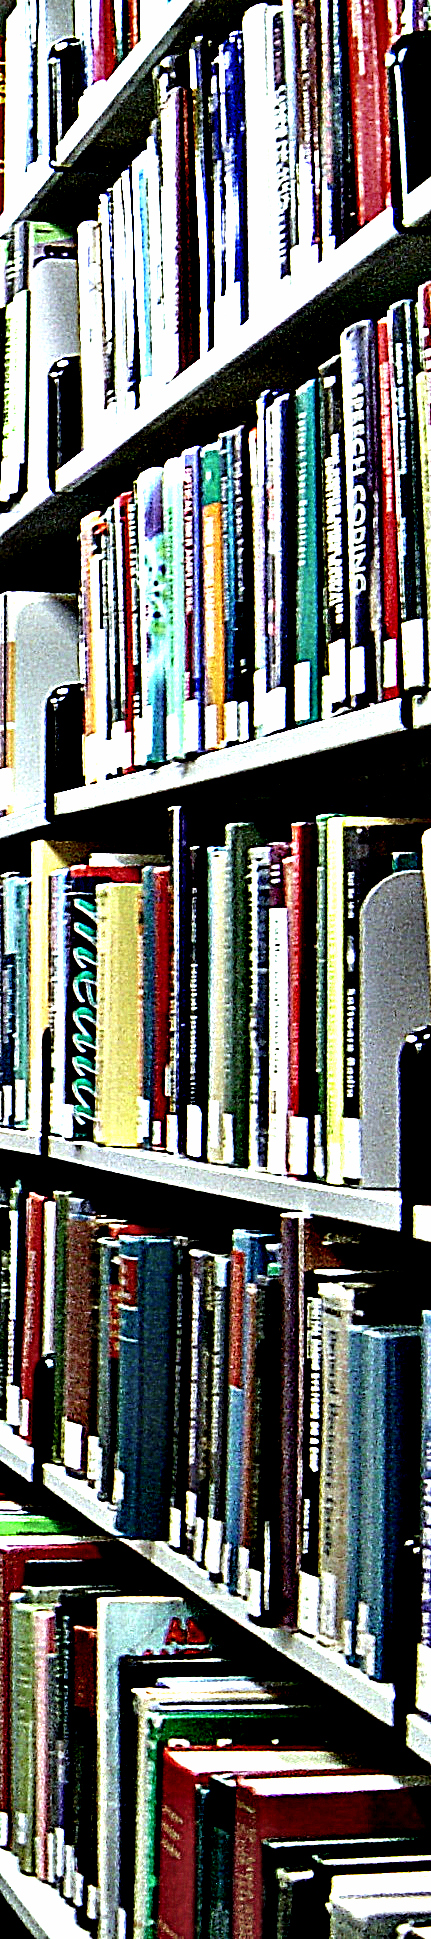 library-book-shelves thin 2